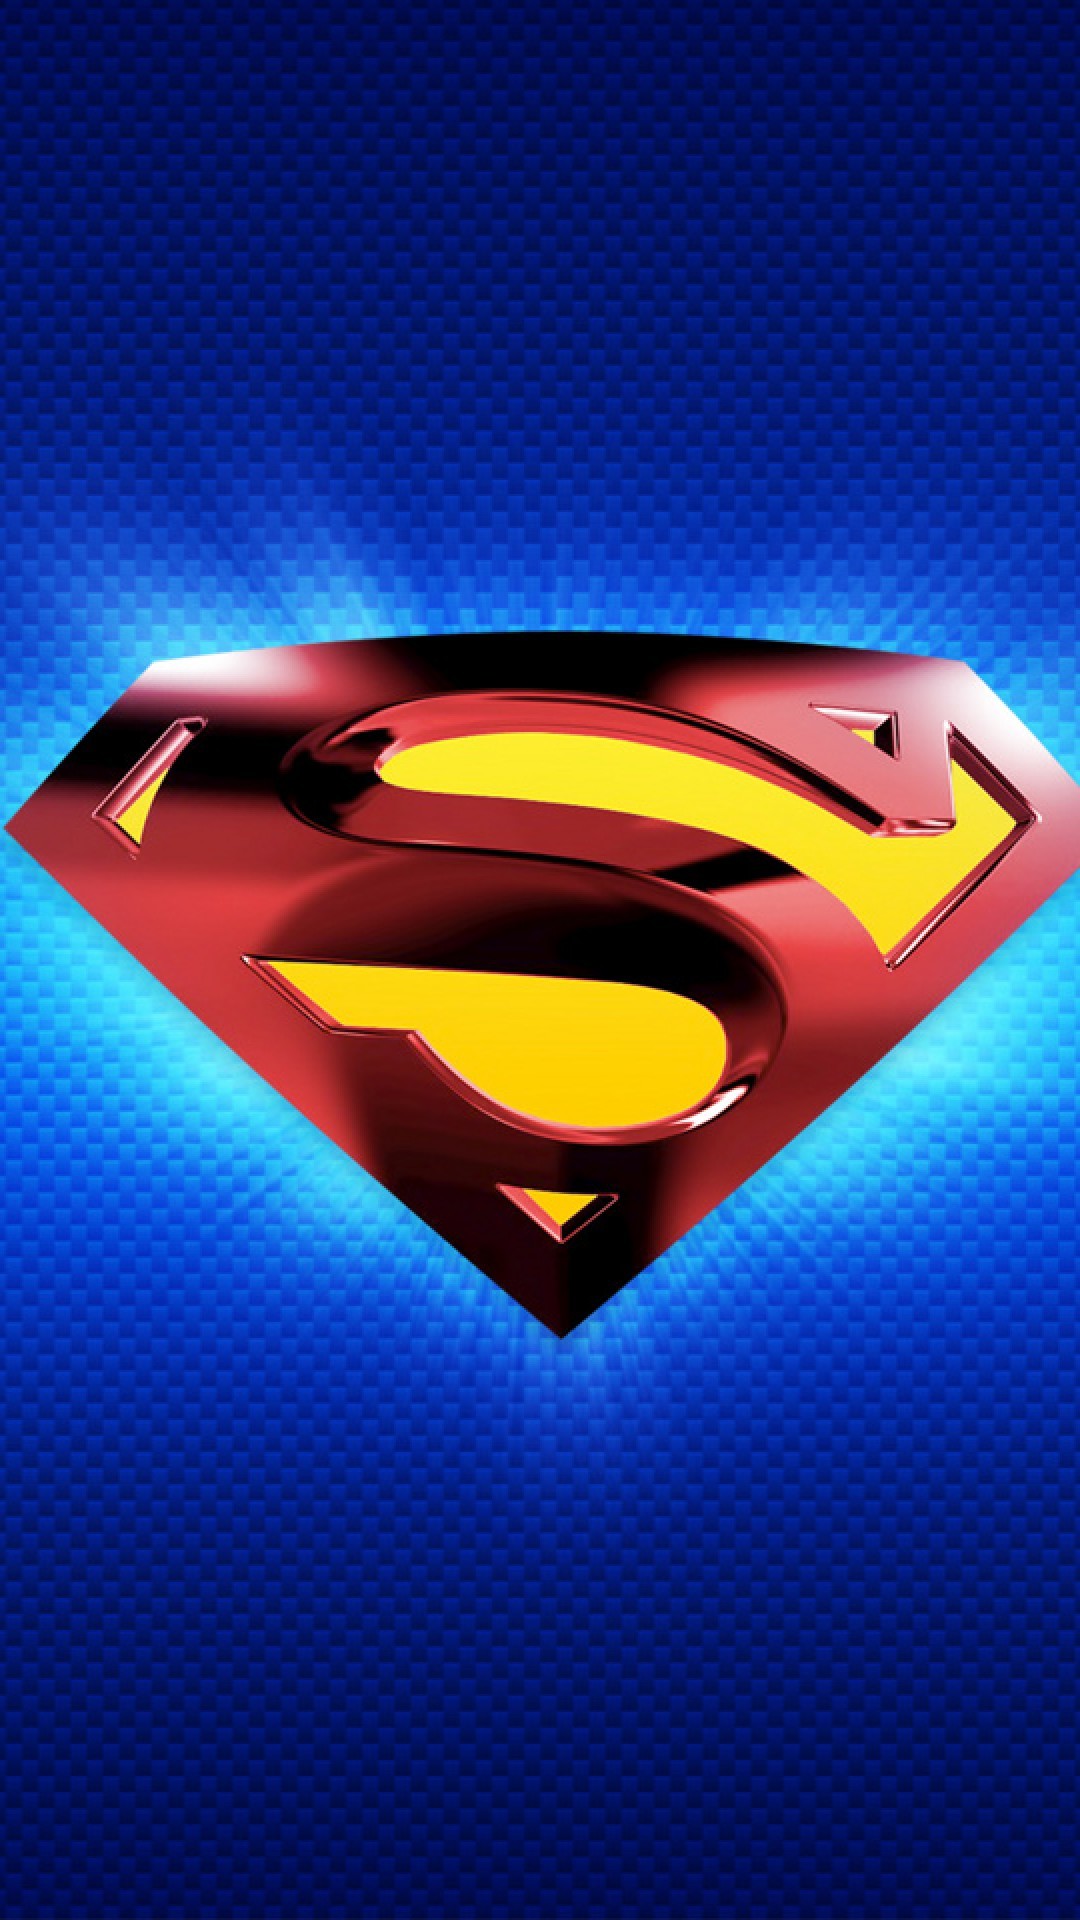 superman wallpaper hd for android,superman,superhero,fictional character,justice league,batman